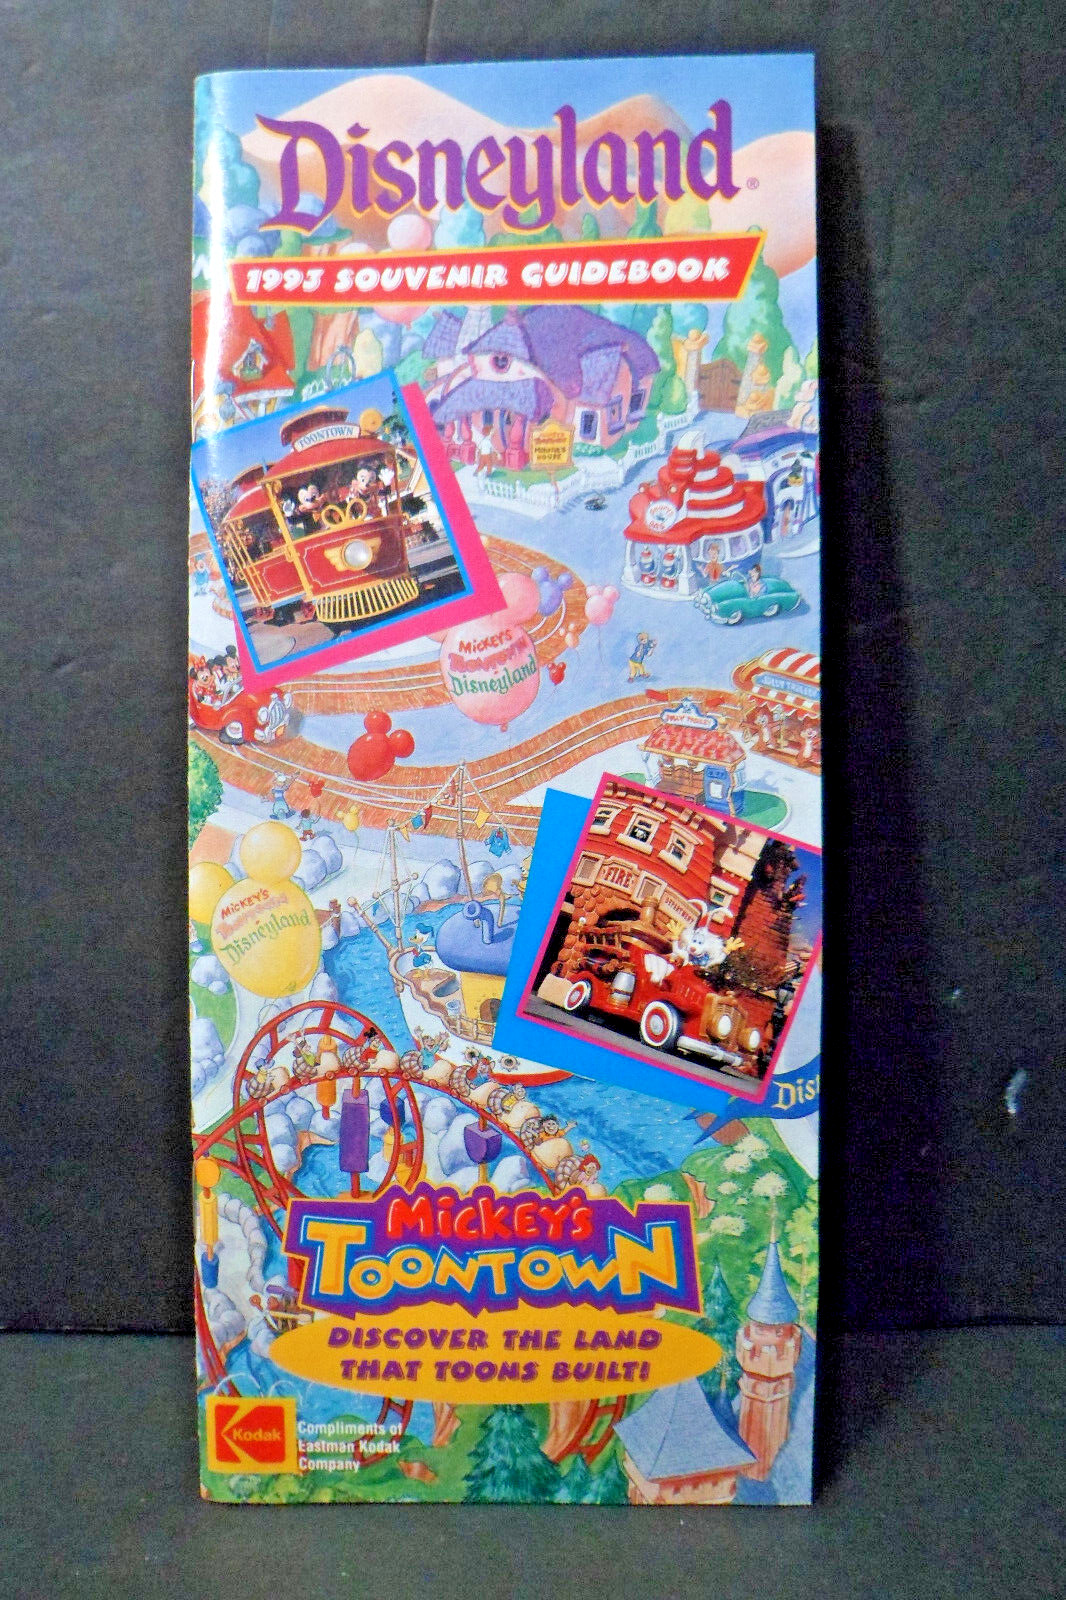 Disneyland 1993 Souvenir Guidebook - Mickey\'s Toowntown Opening Days - New